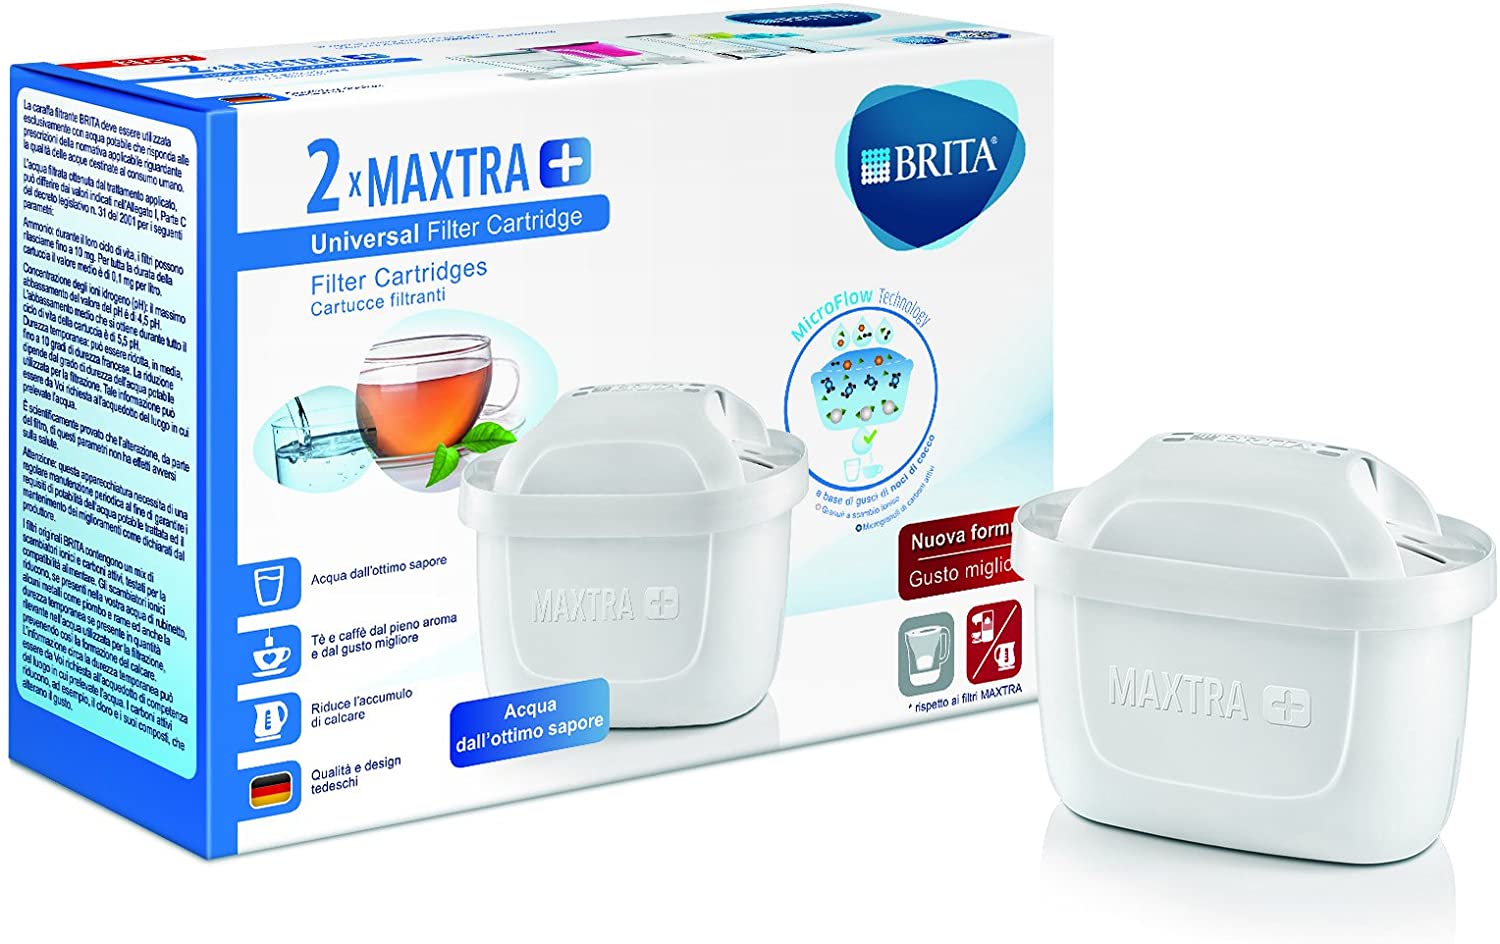 Brita Filtri Maxtra+ Pack 2 Cartucce Filtranti per Caraffe, 2 Mesi di Acqua Filtrata, Plastica/Carboni/Resine, Plastica, Bianco, 2 Unità